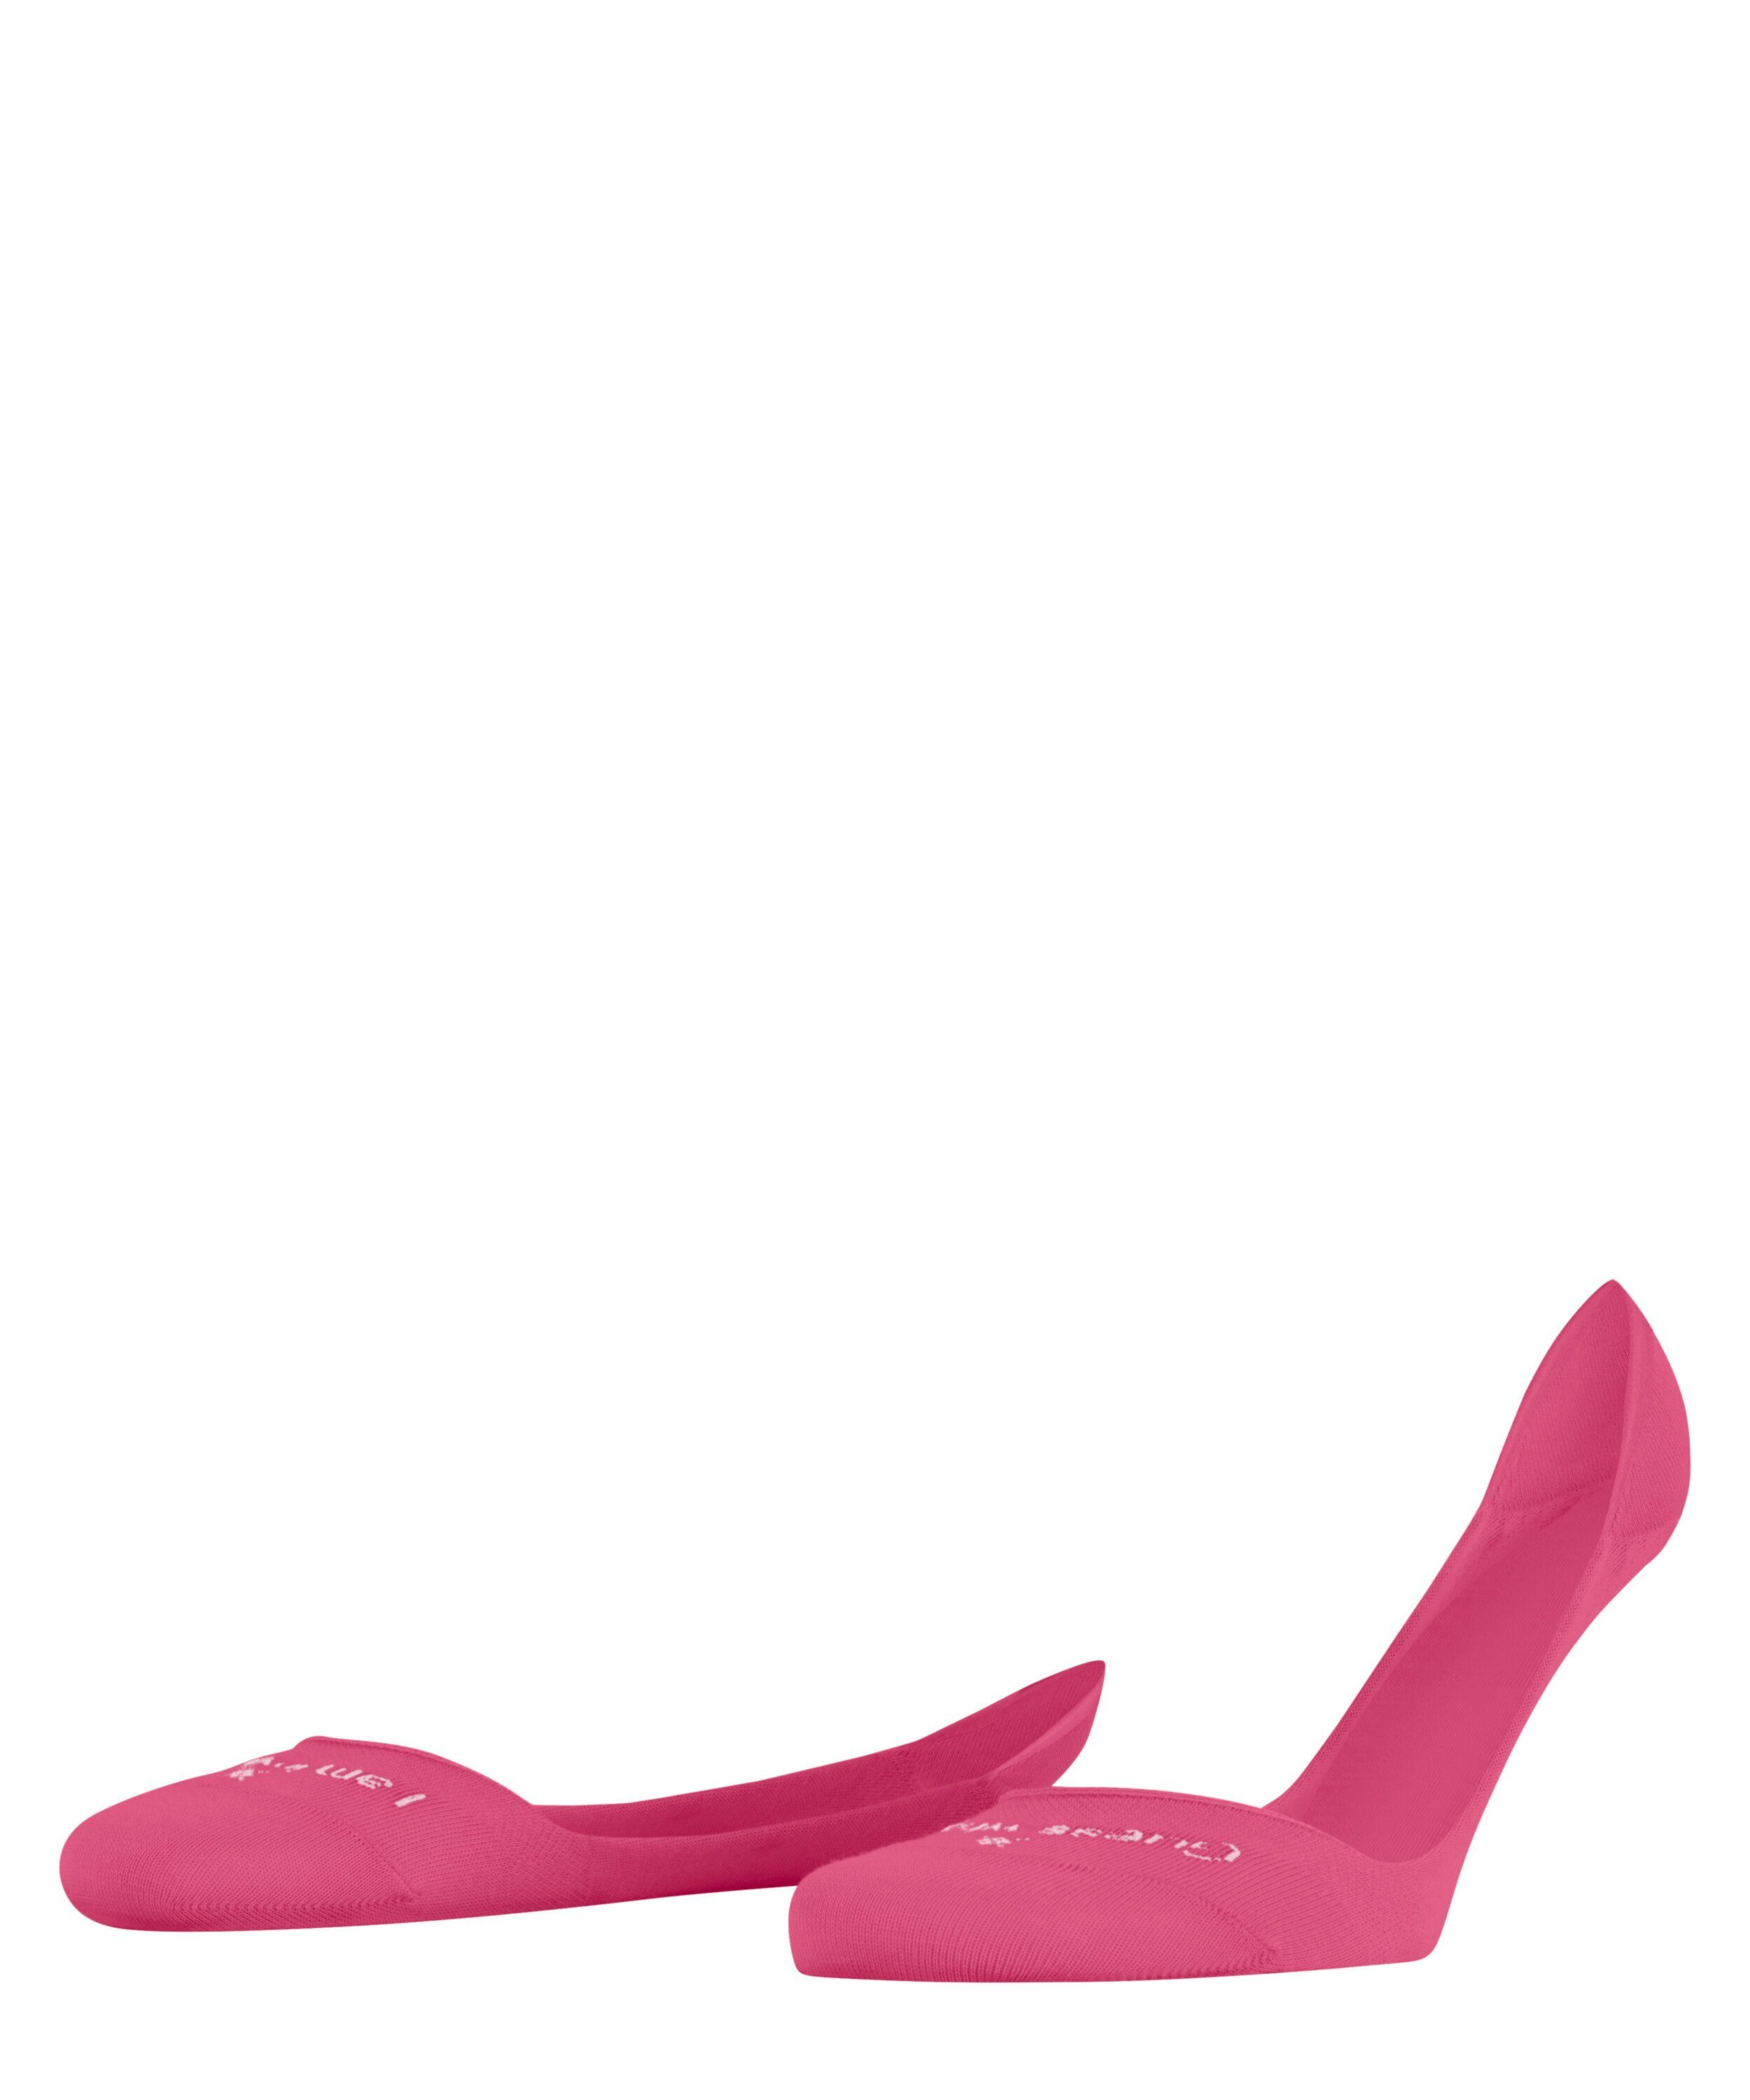 (8414) in der Burlington mit pink Füßlinge Aberdeen Silikon Ferse hot